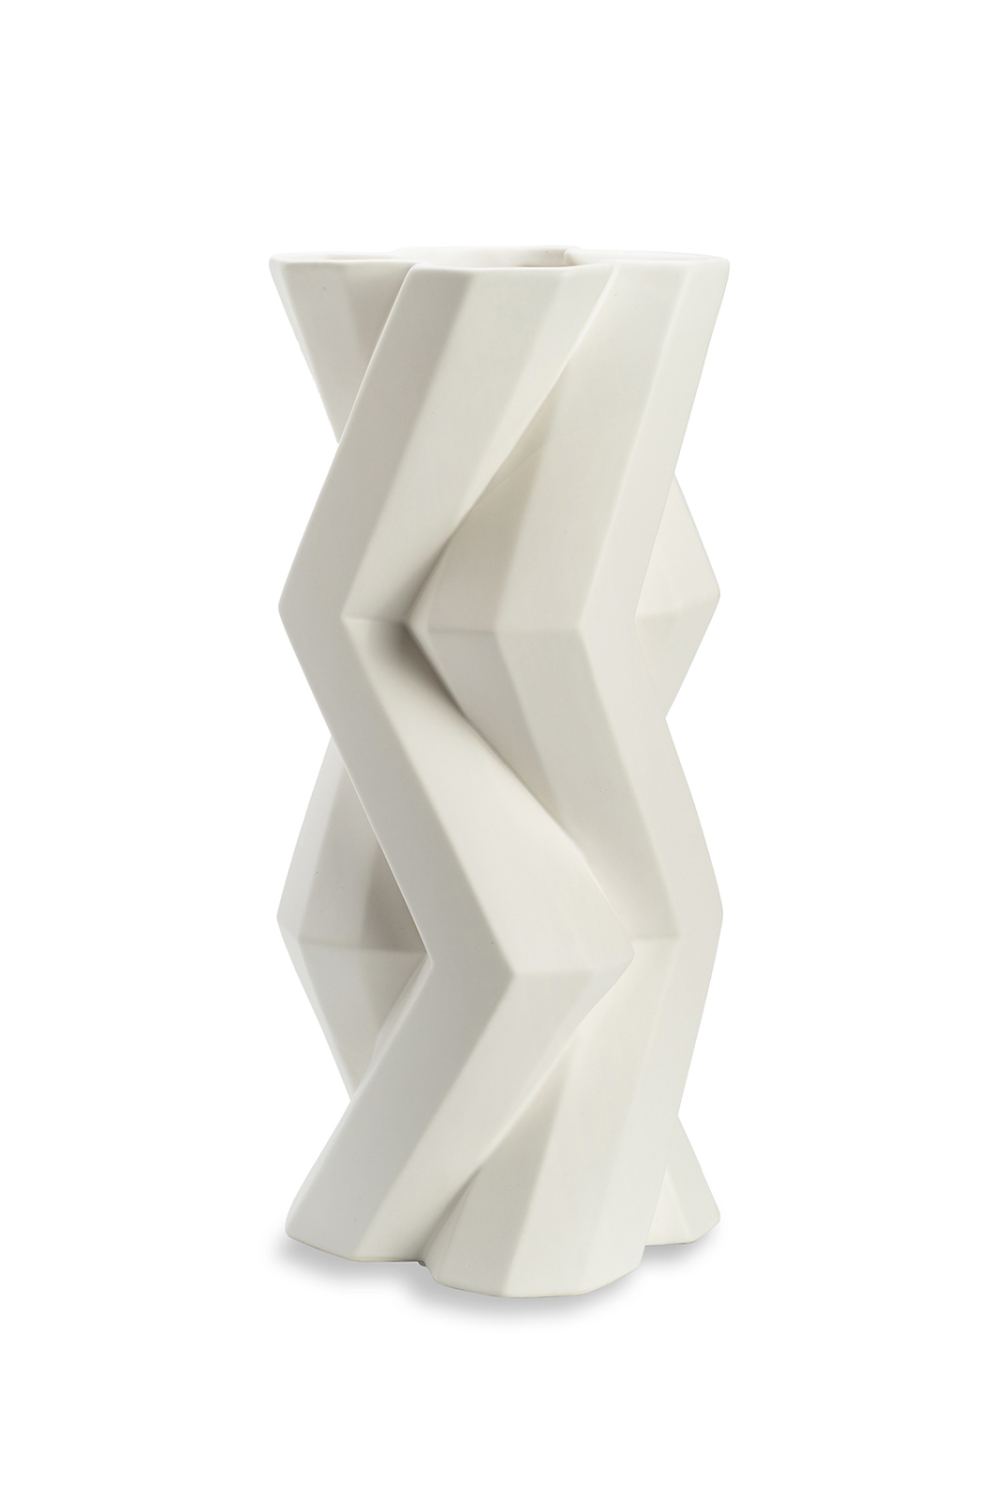 Geometrical White Ceramic Vase | Liang & Eimil Boccio | OROA.com